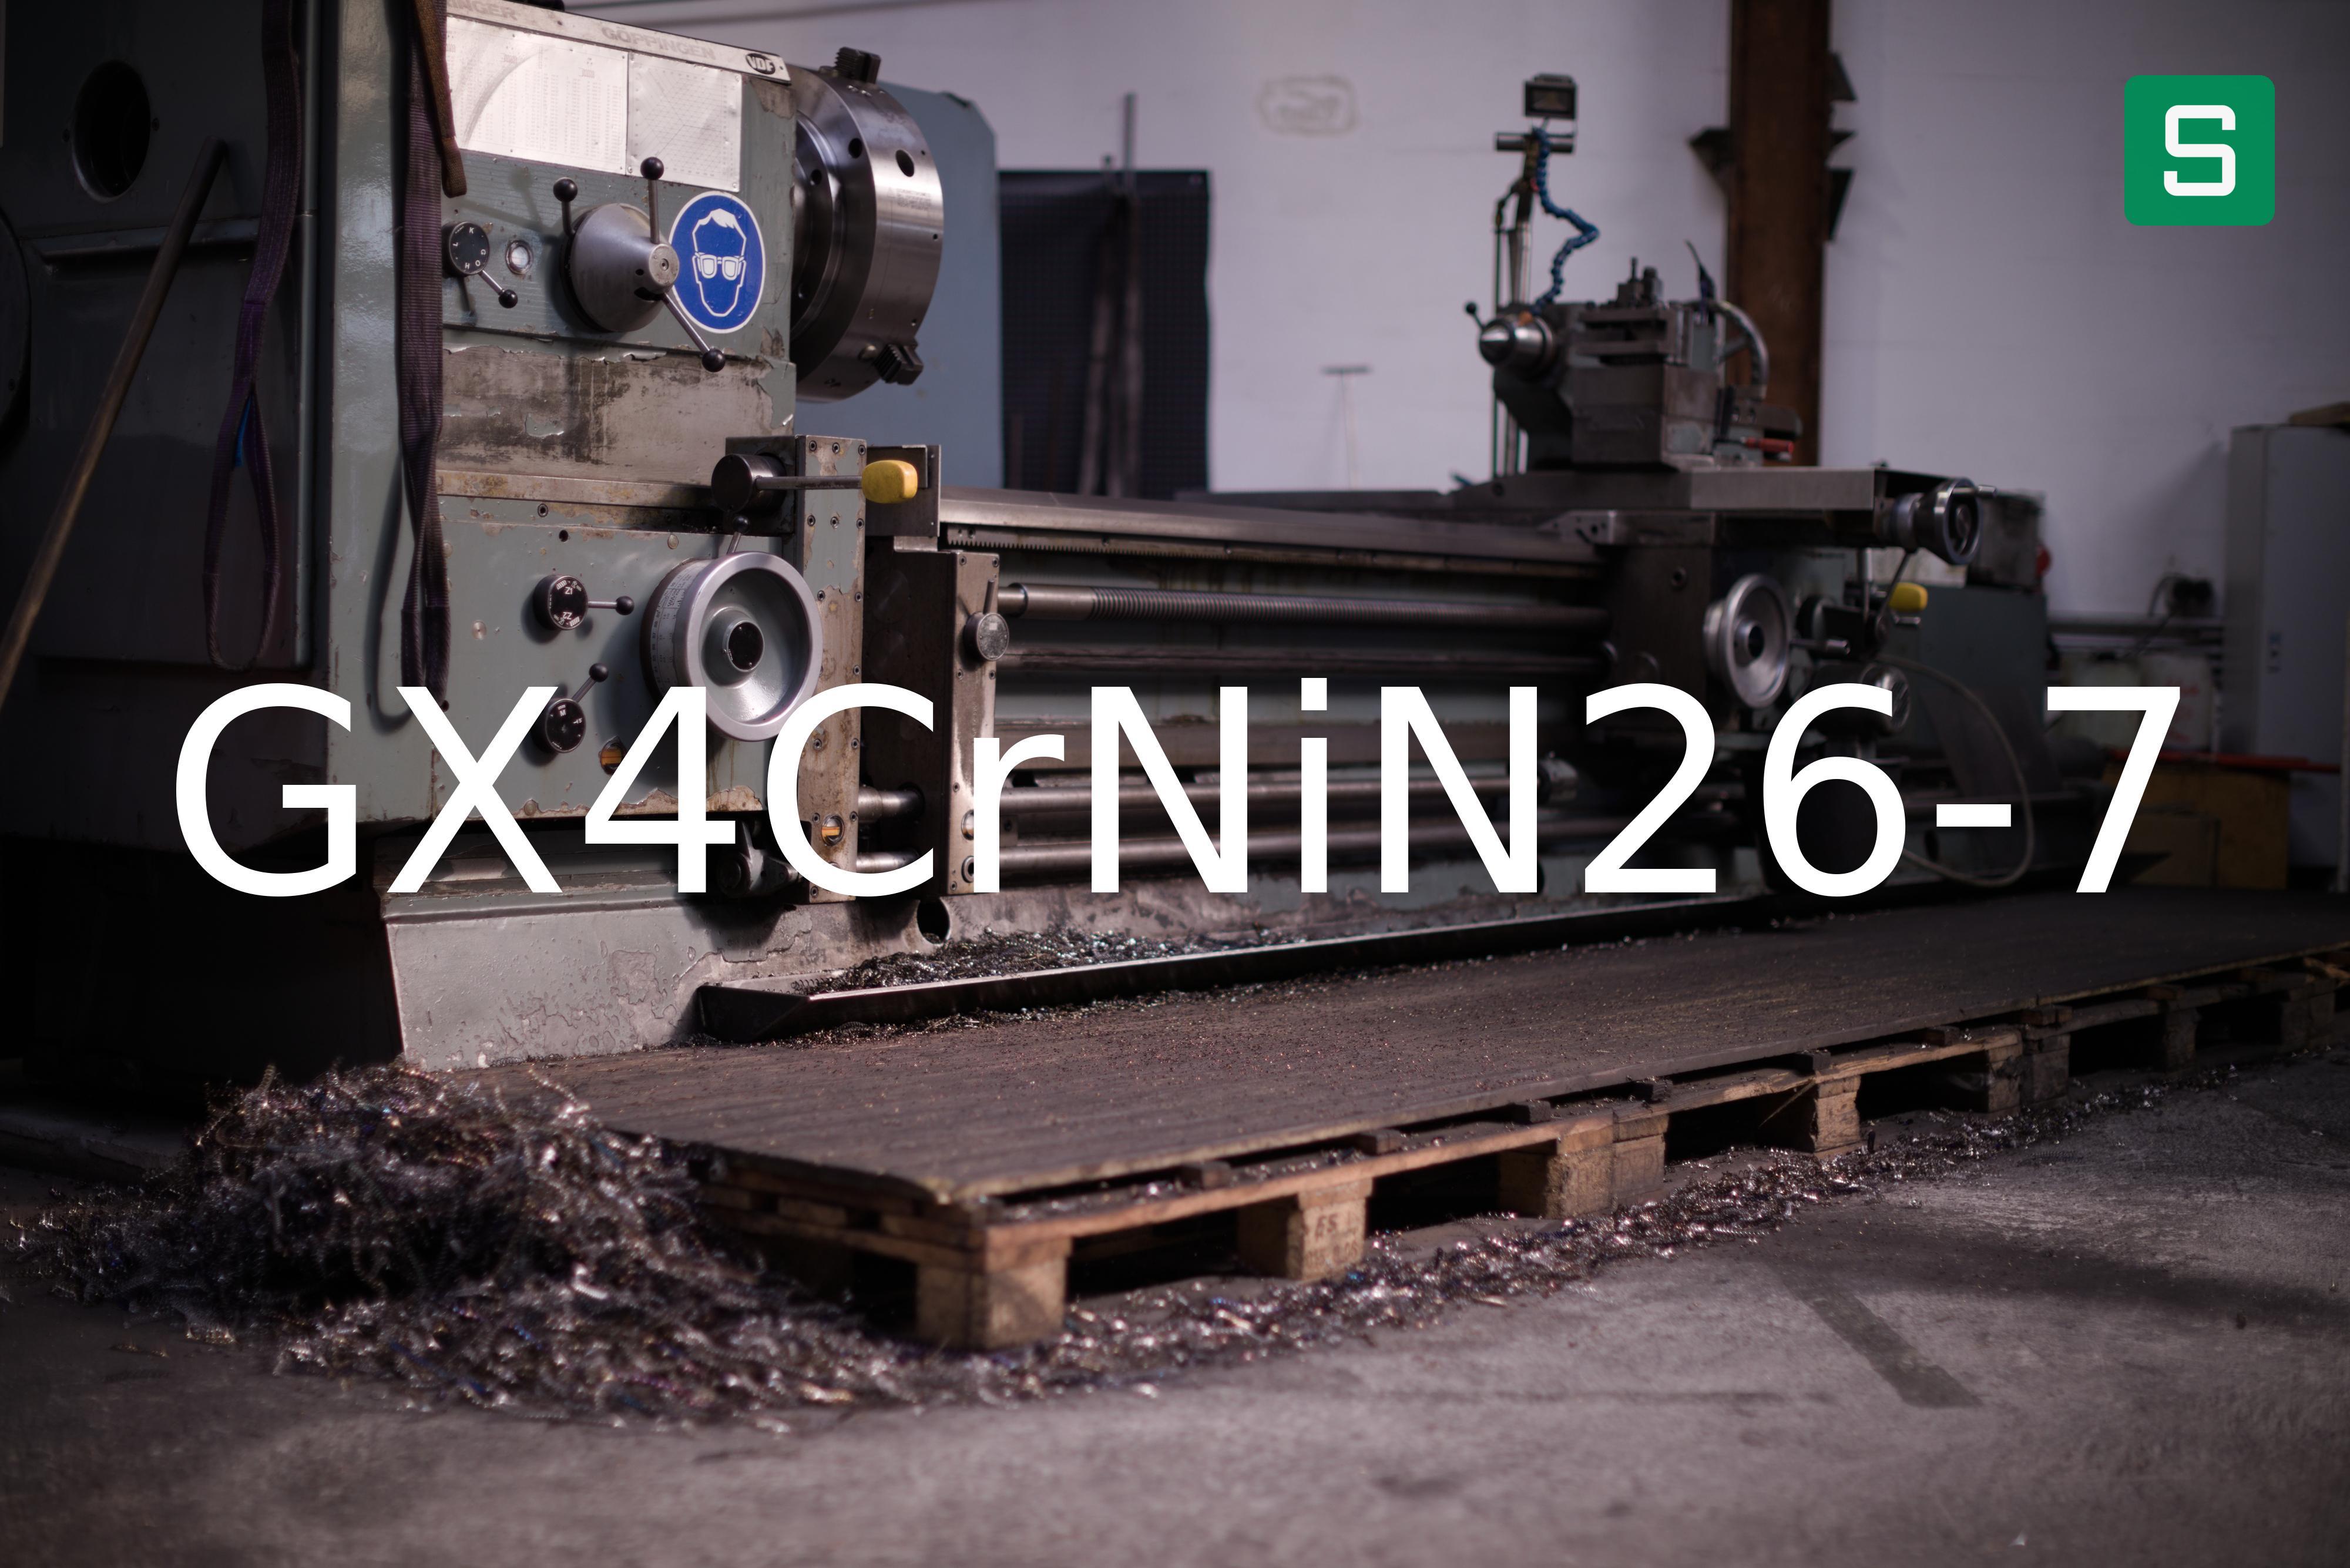 Steel Material: GX4CrNiN26-7